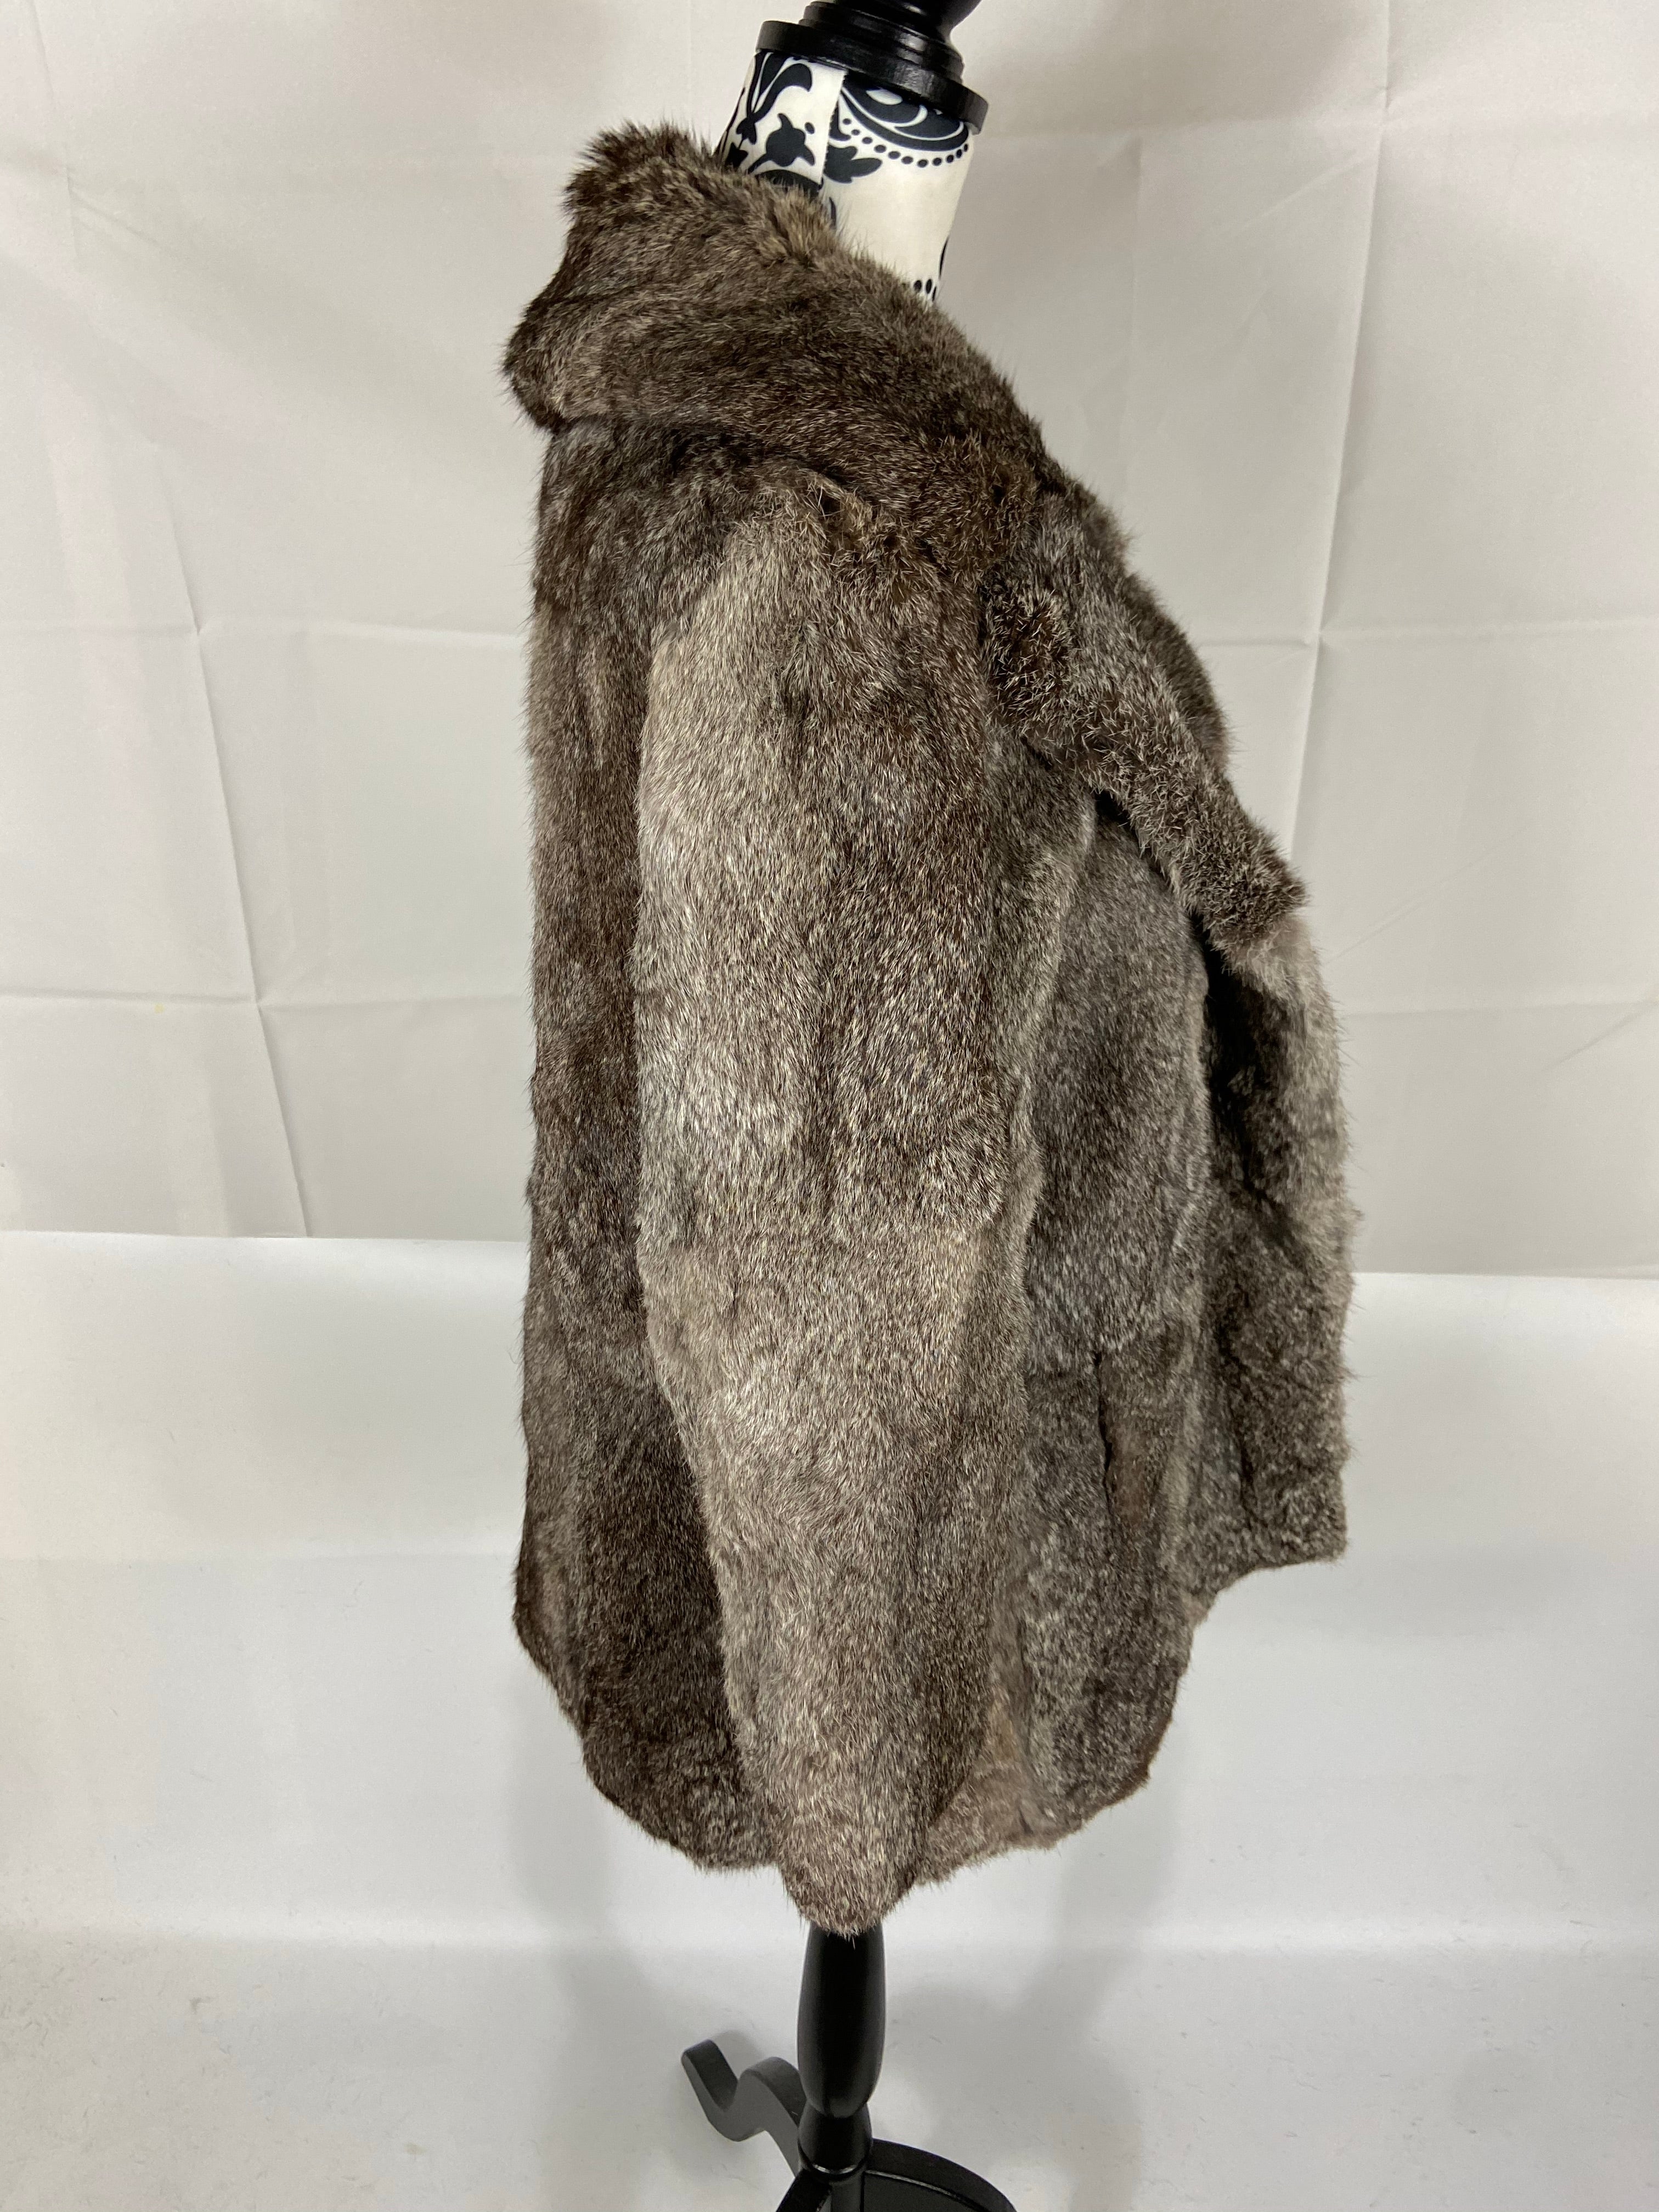 Women’s Vintage Stunning Real Rabbit Fur Coat Size: Small-Medium